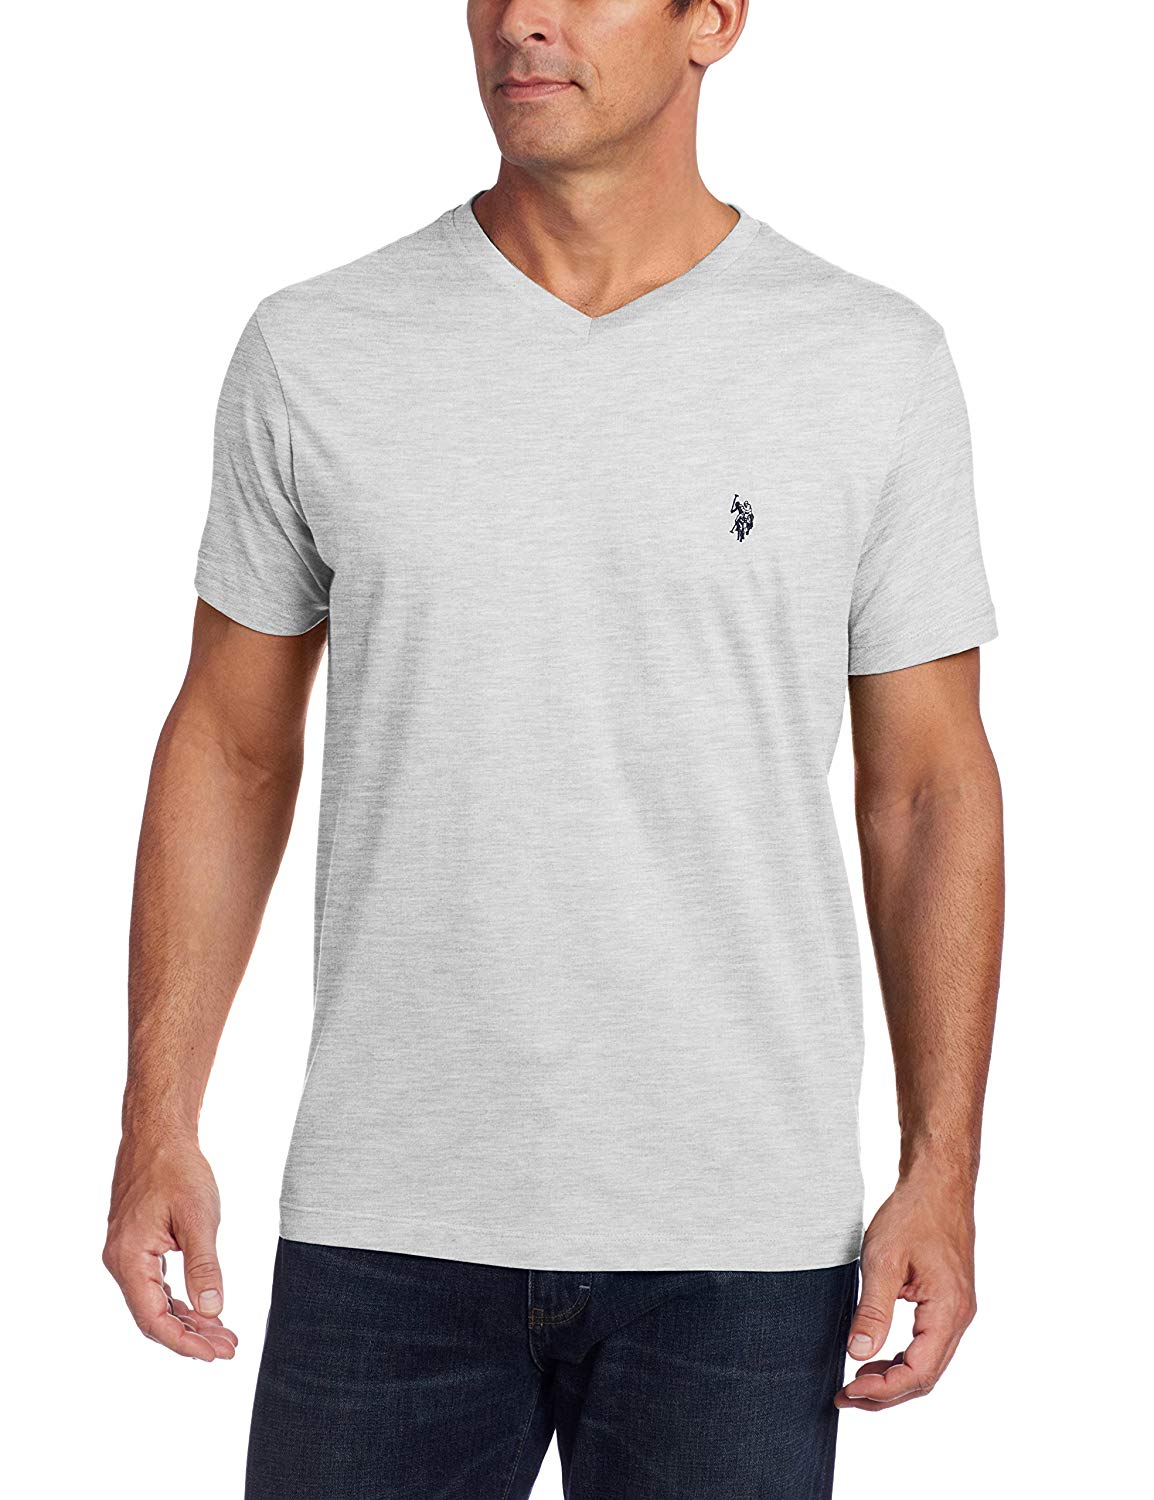 U.S. Polo Assn. Men's V-Neck Knit T-Shirt - image 1 of 2